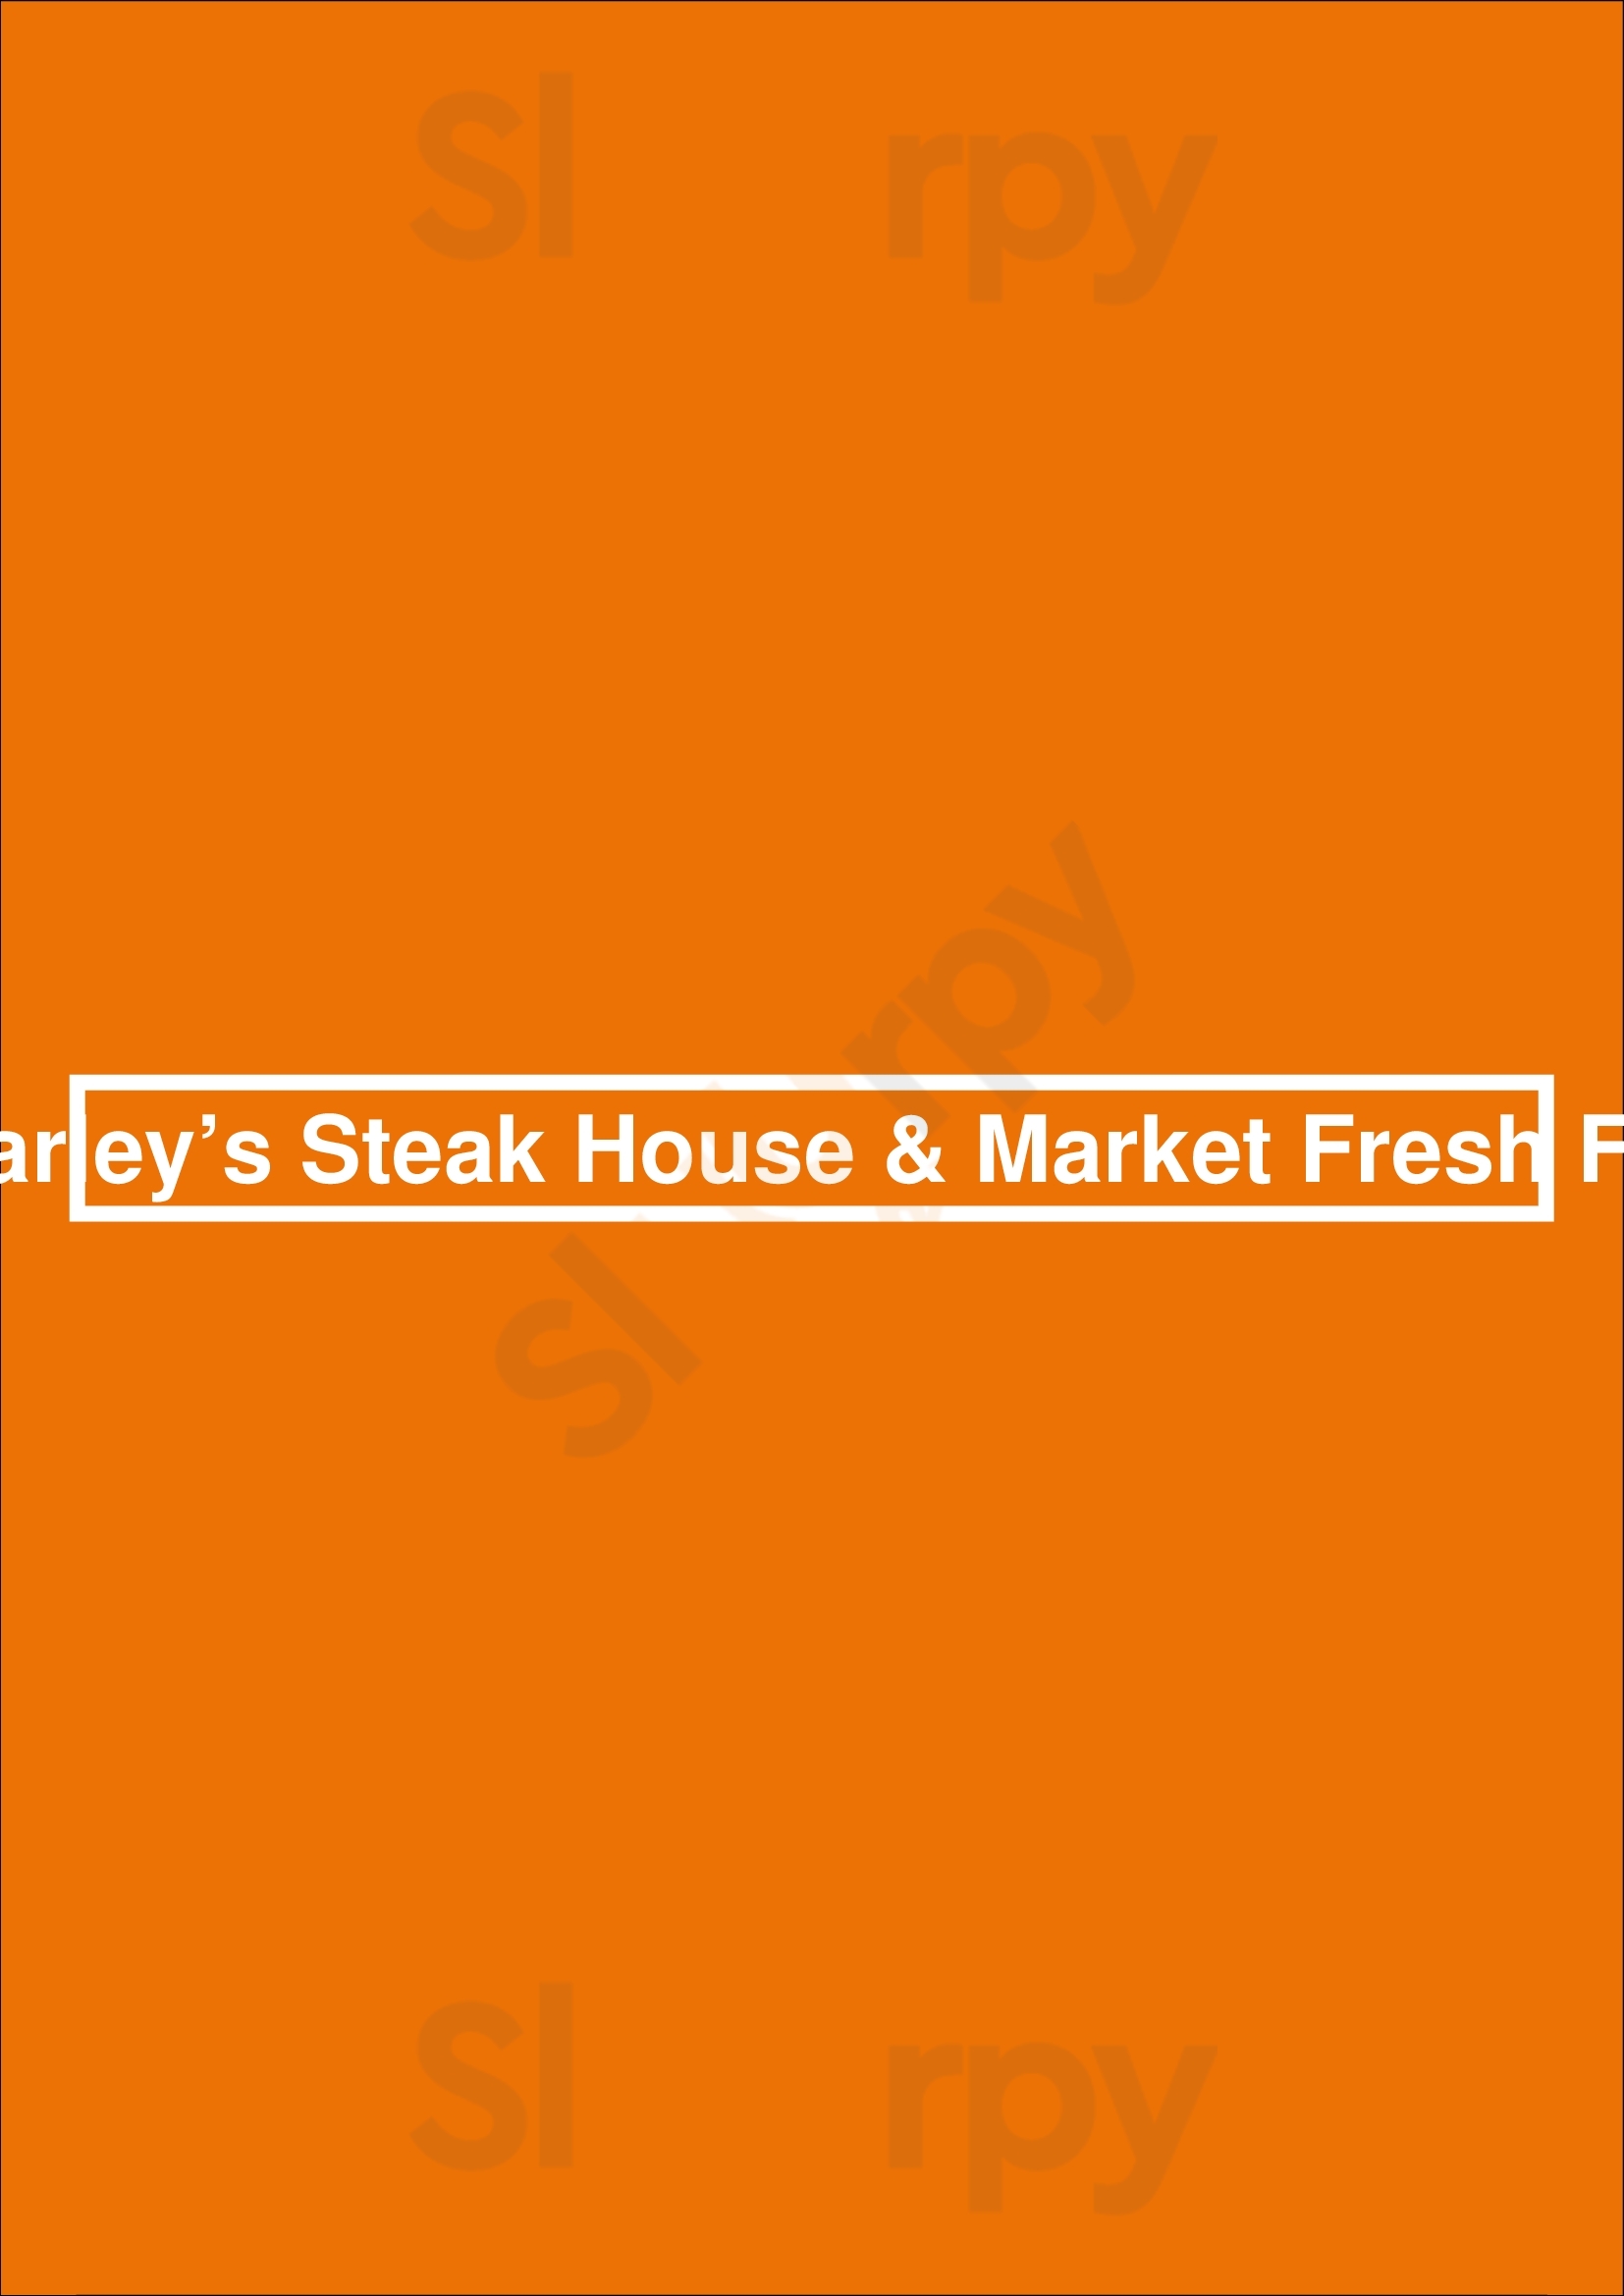 Charley’s Steak House & Market Fresh Fish Tampa Menu - 1